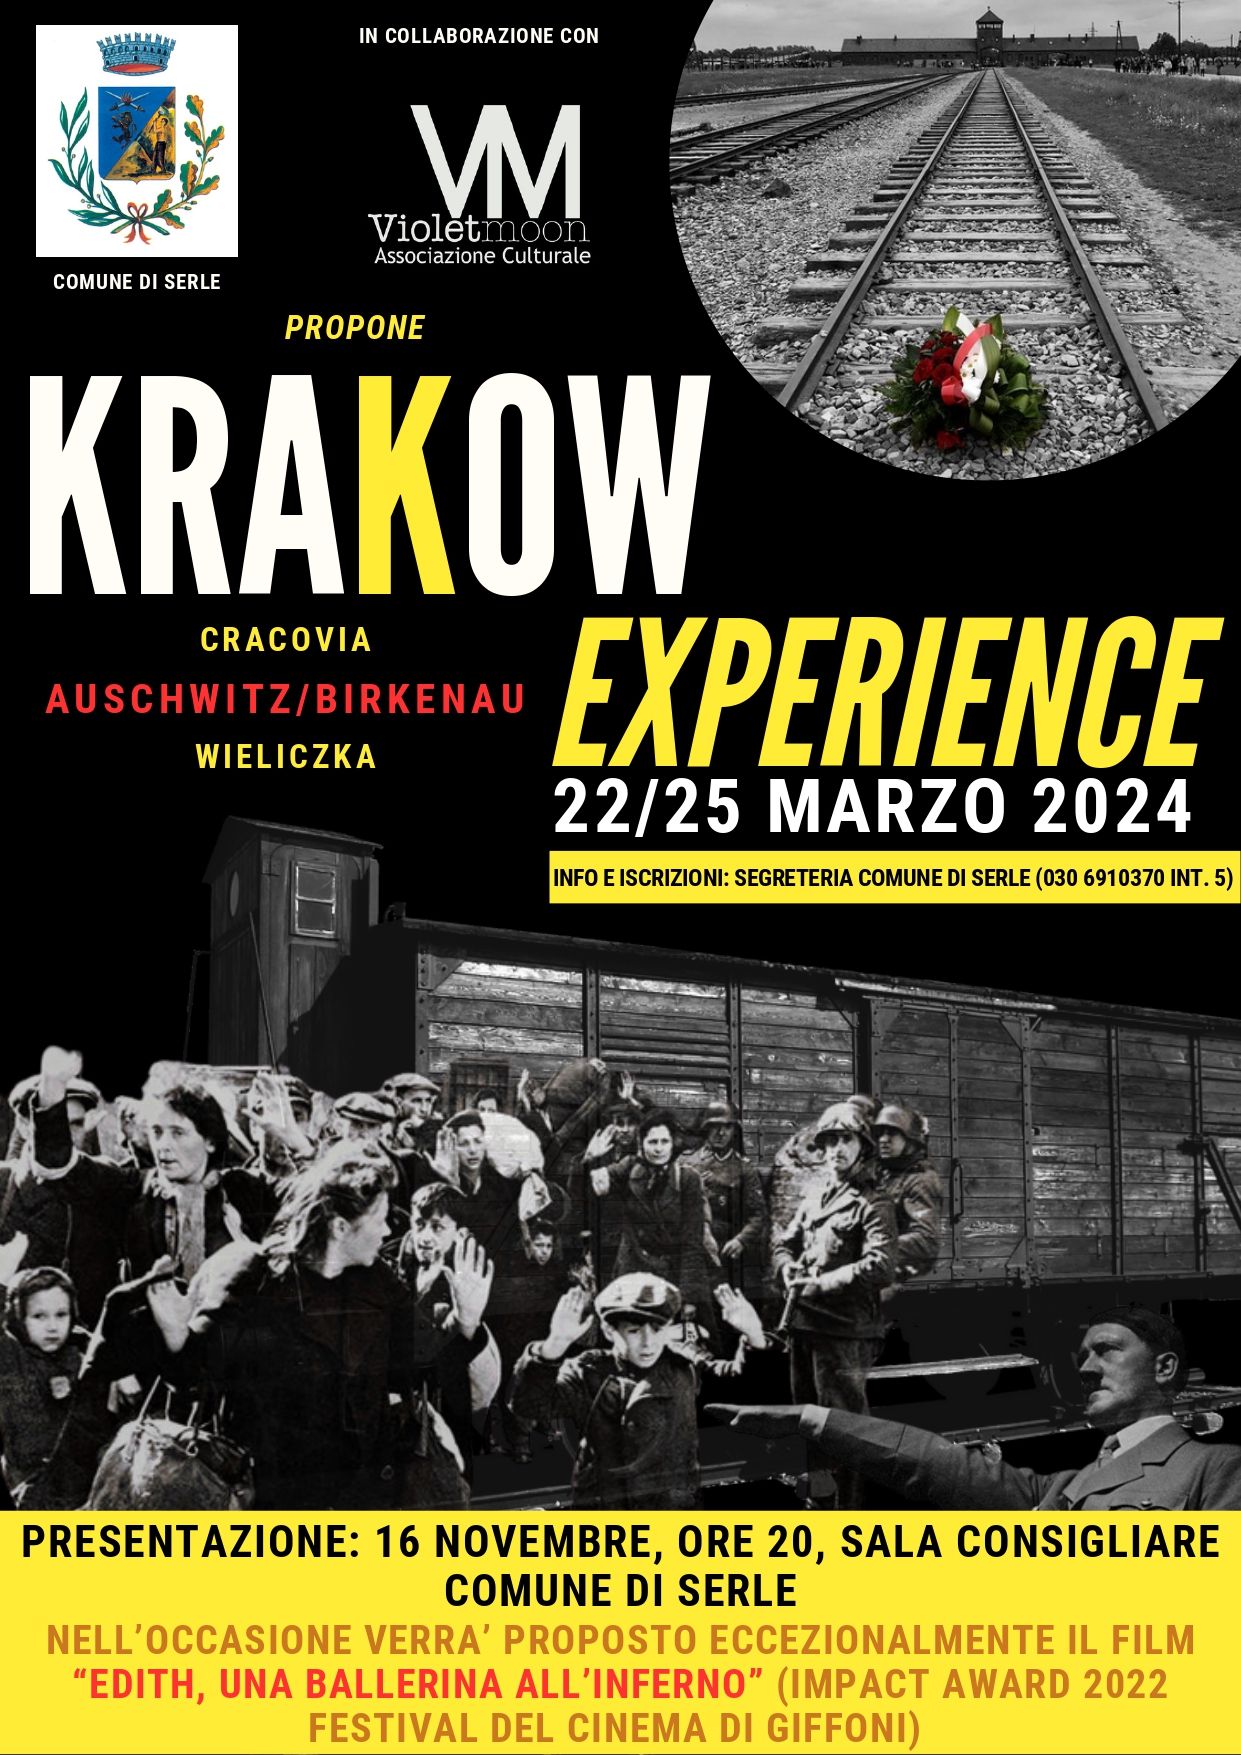 Immagine di copertina per KRAKOW EXPERIENCE - AUSCHWITZ / BIRKENAU 22/25 MARZO 2024